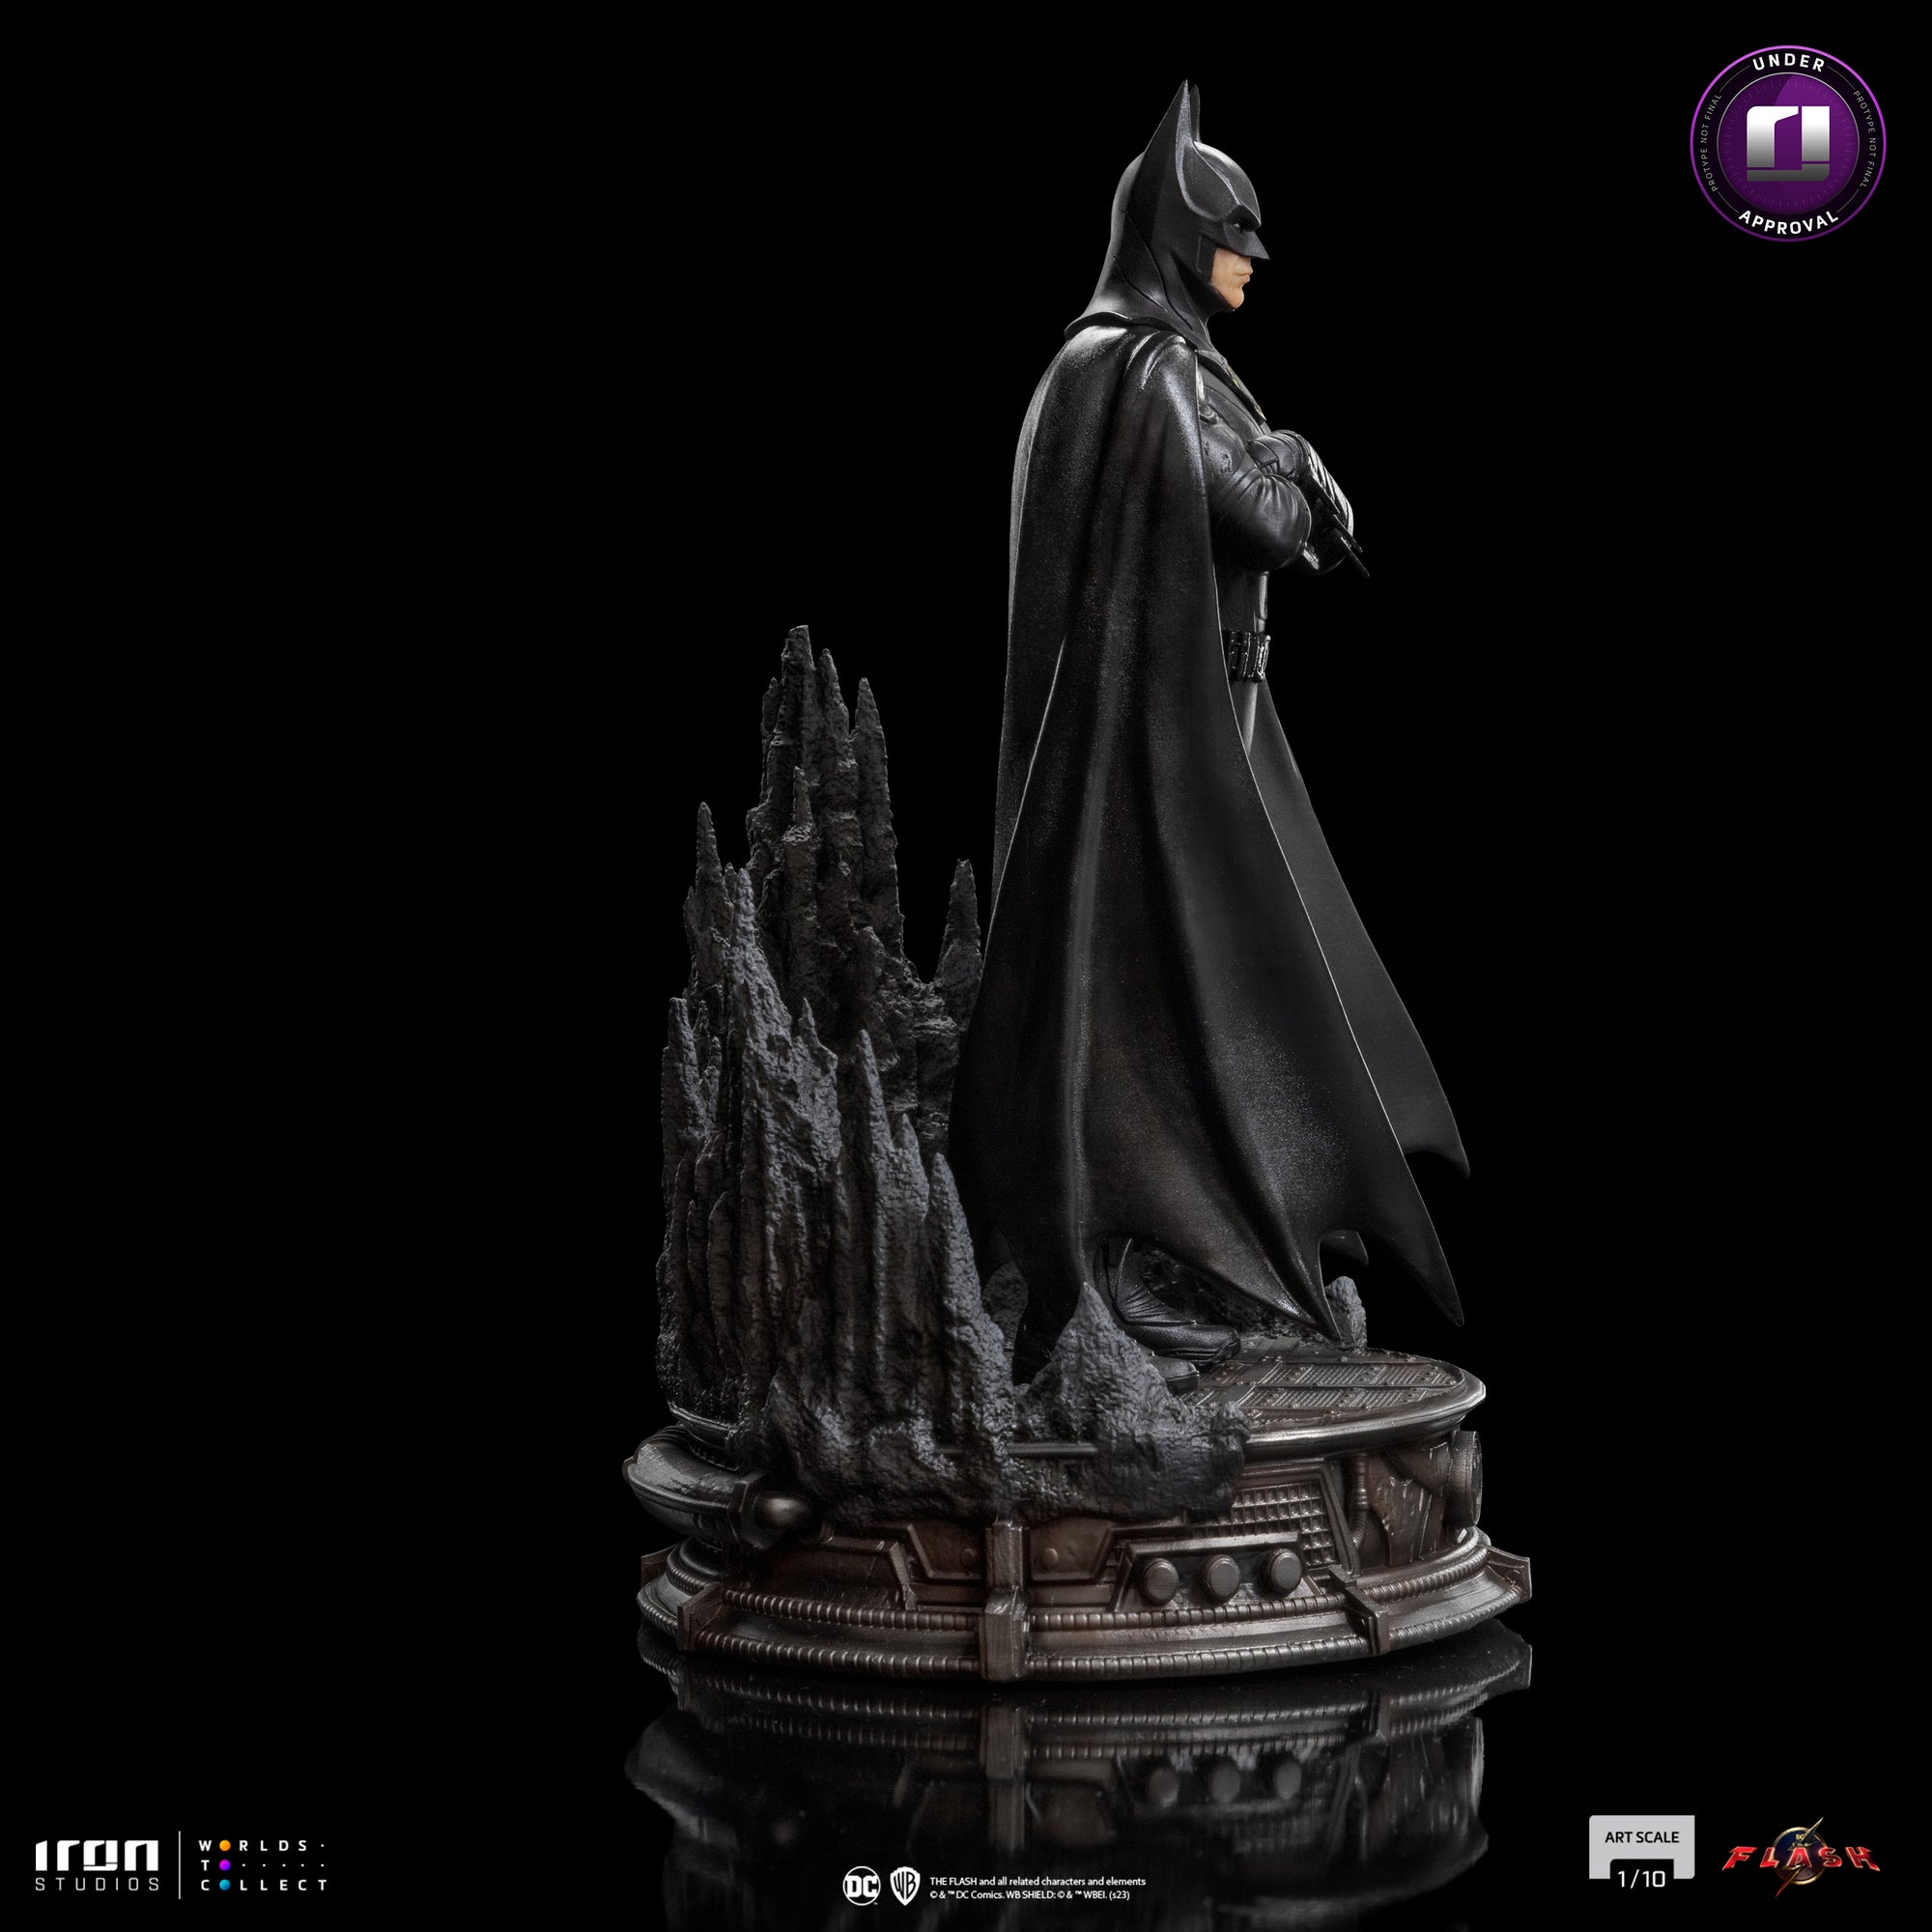 The Flash Movie Batman Statue by Iron Studios -Iron Studios - India - www.superherotoystore.com